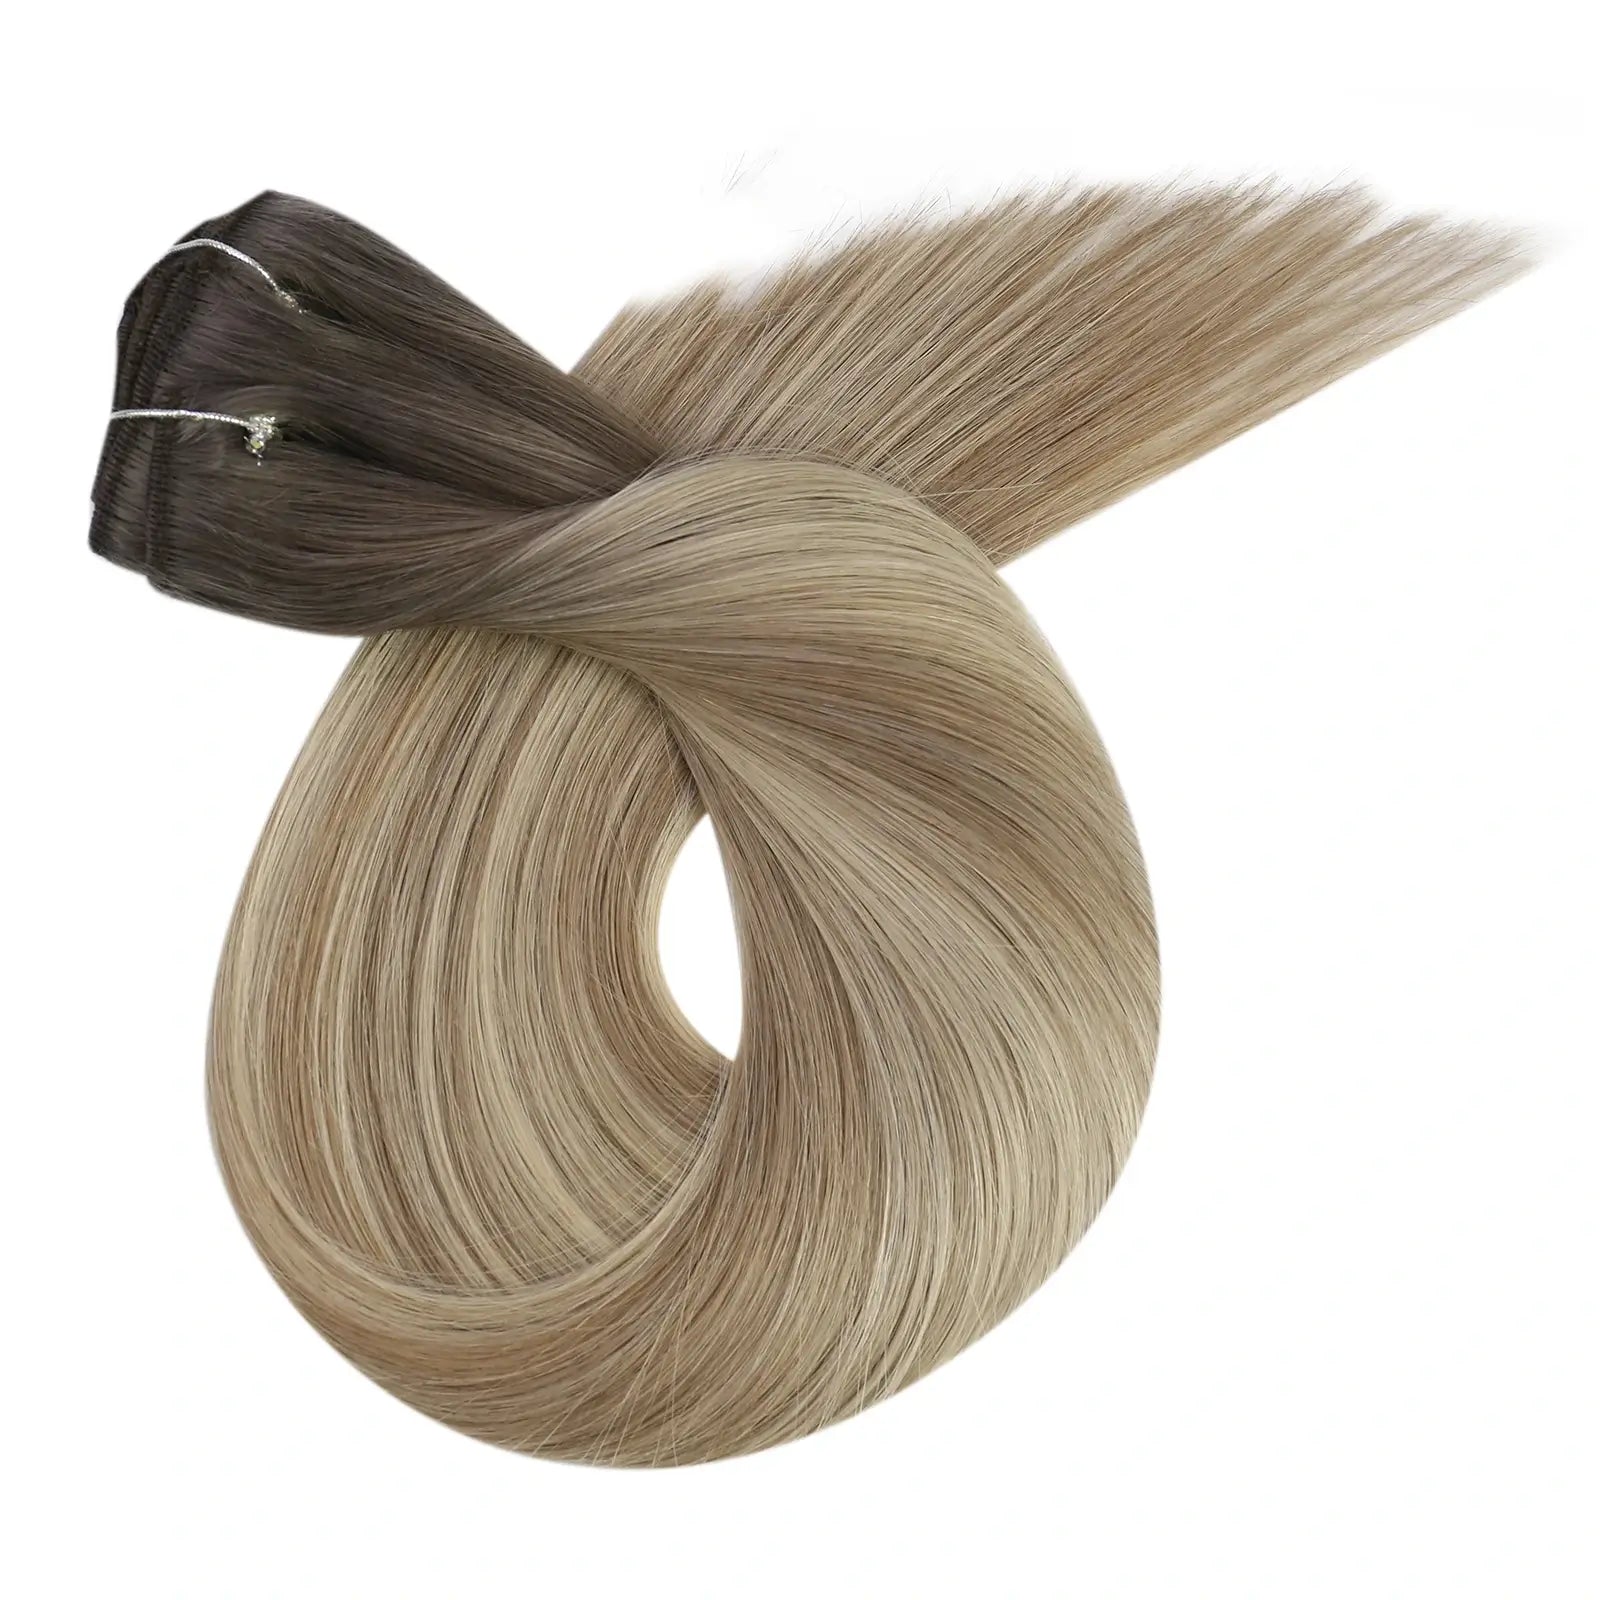 high quality human hair extensions clip ins for thin hair